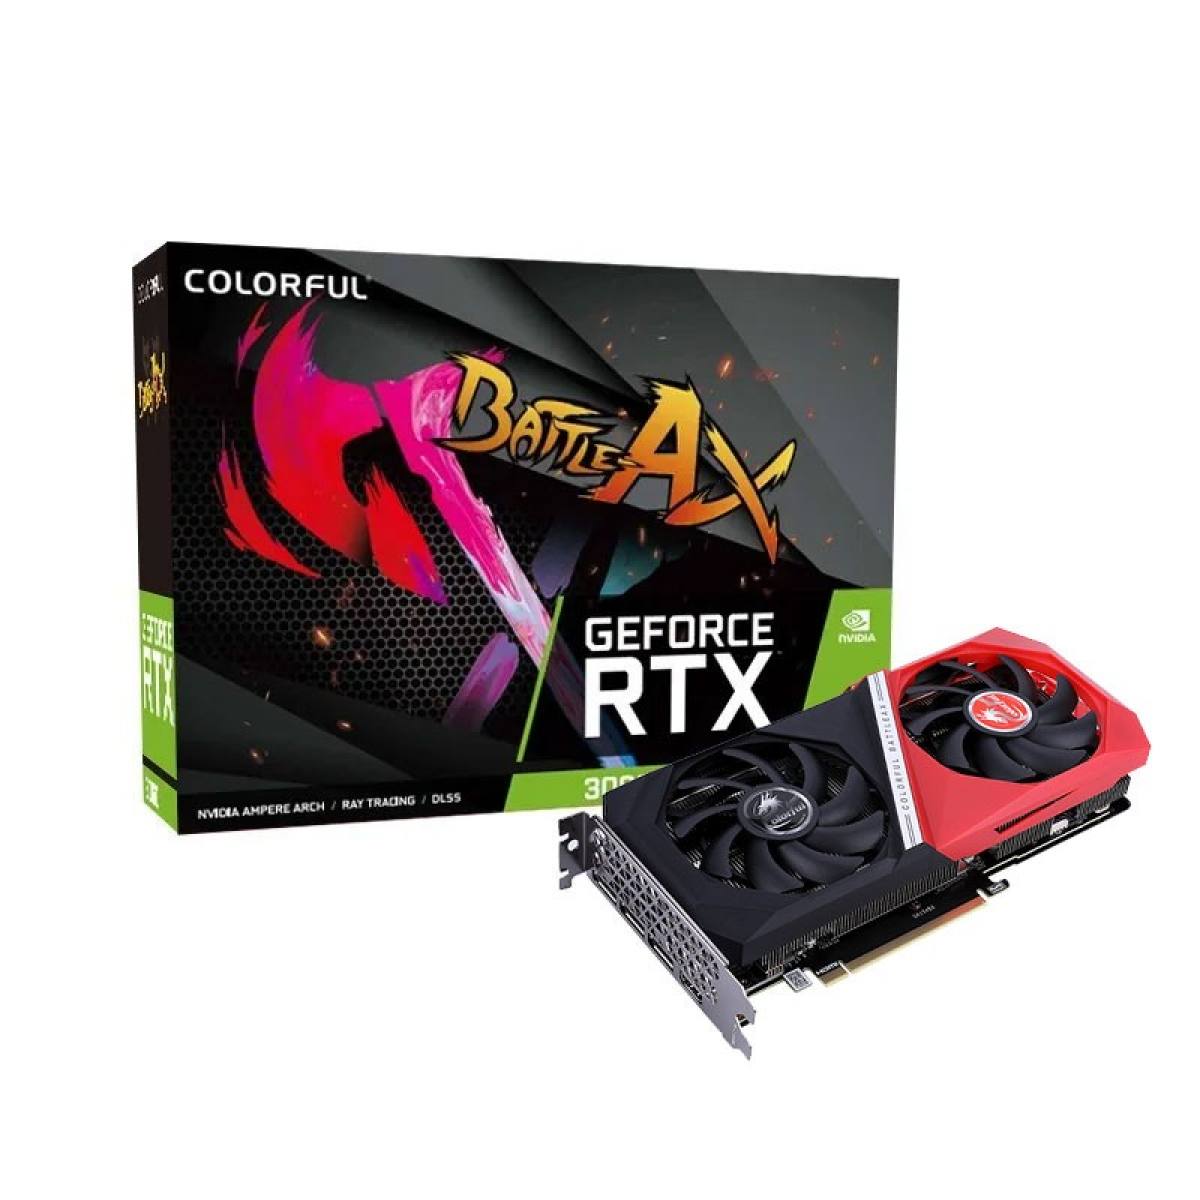 VGA Colorful GeForce RTX 3050 DUO 8G  - 2 Fan